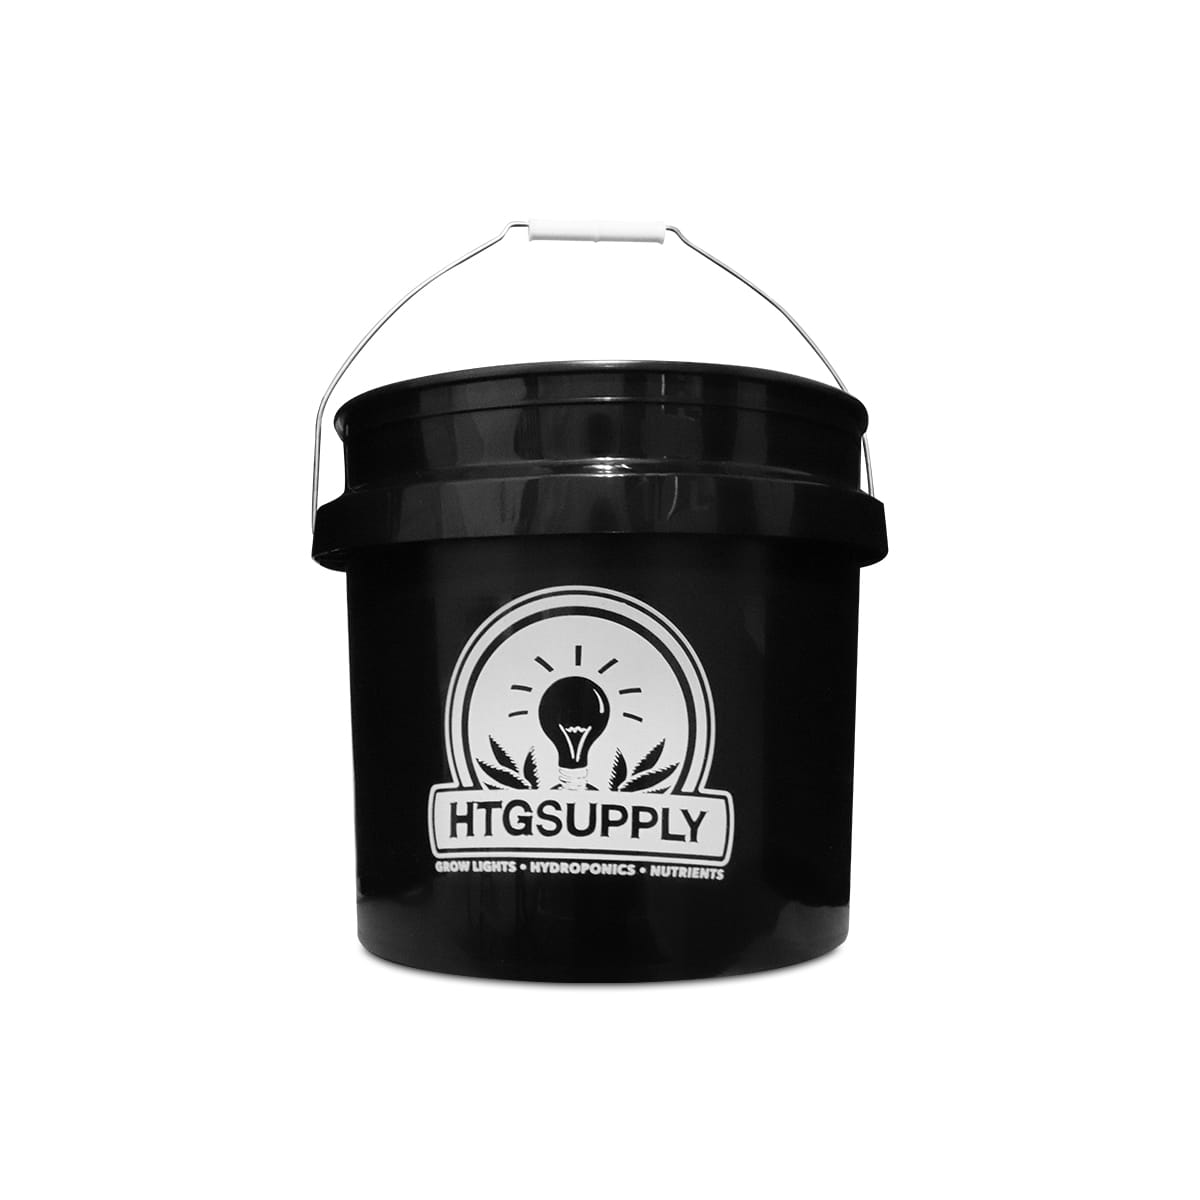 3.5 Gallon & 5 Gallon Premium Black Plastic Buckets 60lb. - Nickel City  Wholesale Garden Supply 